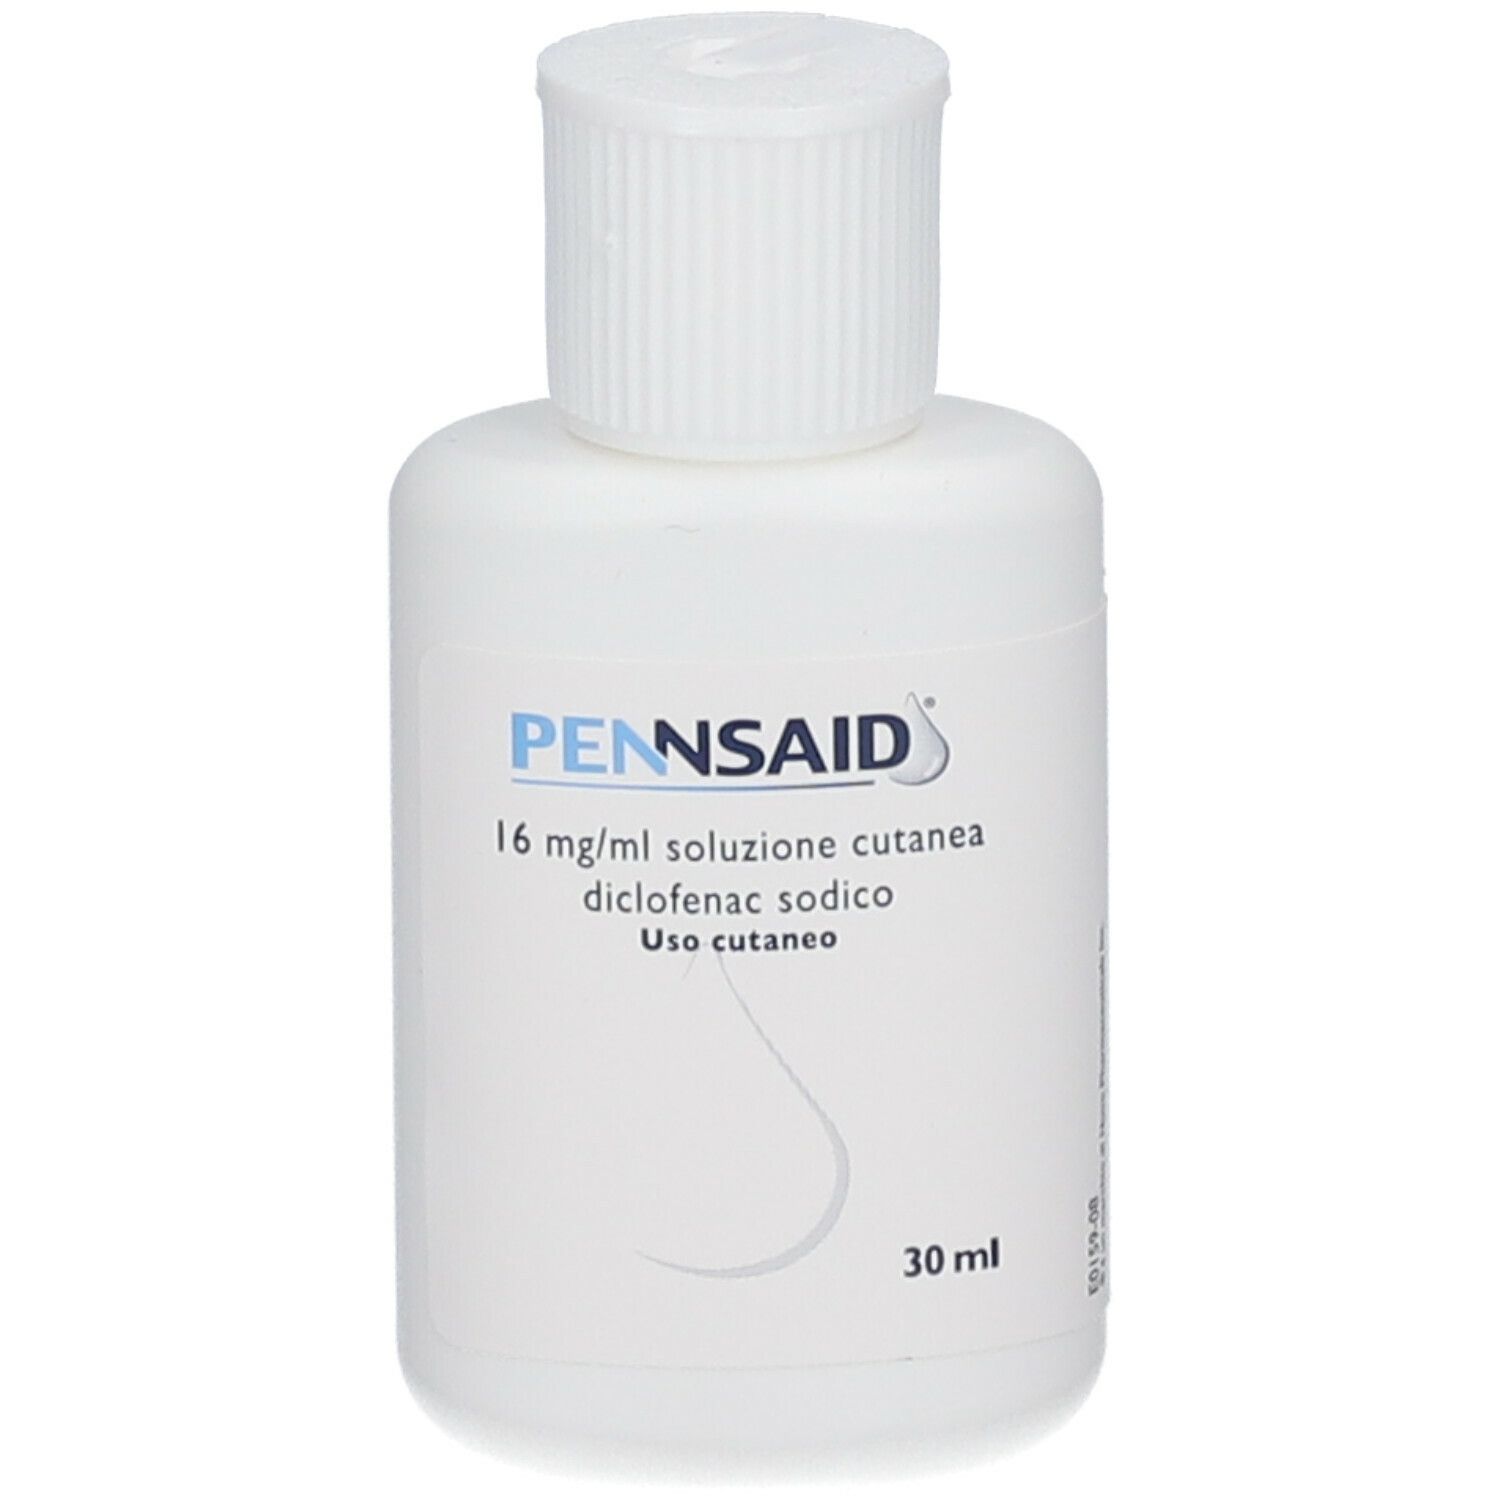 PENNSAID® Diclofenac Sodico